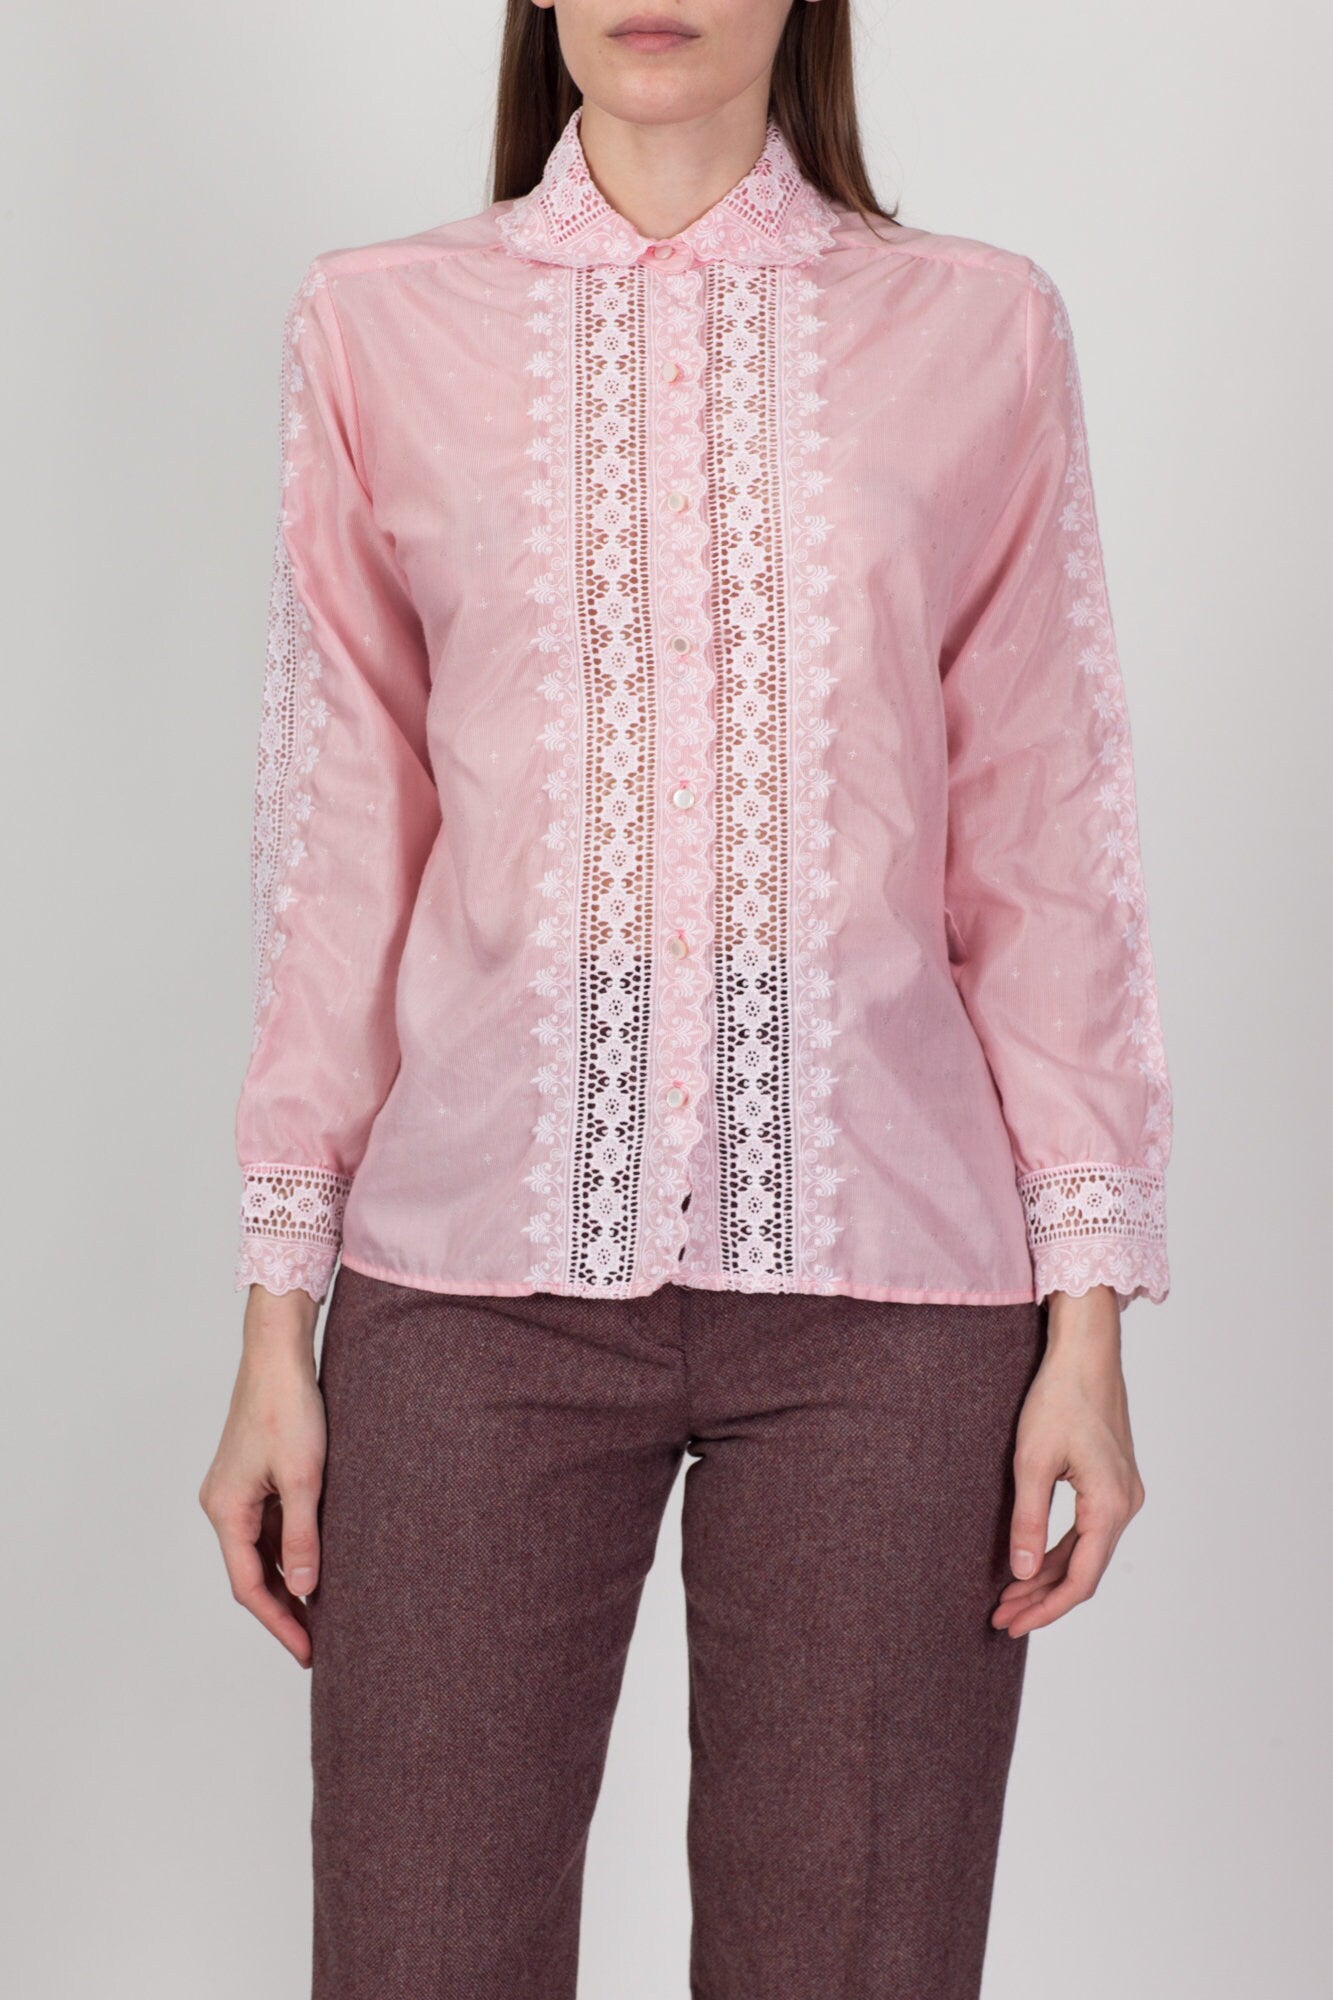 70s Pink & White Sheer Lace Blouse - Medium 